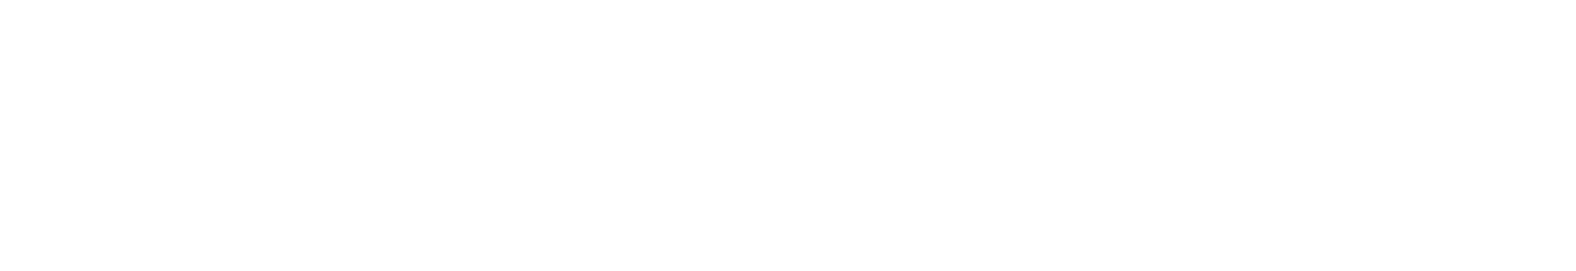 Euronet Worldwide
 logo large for dark backgrounds (transparent PNG)